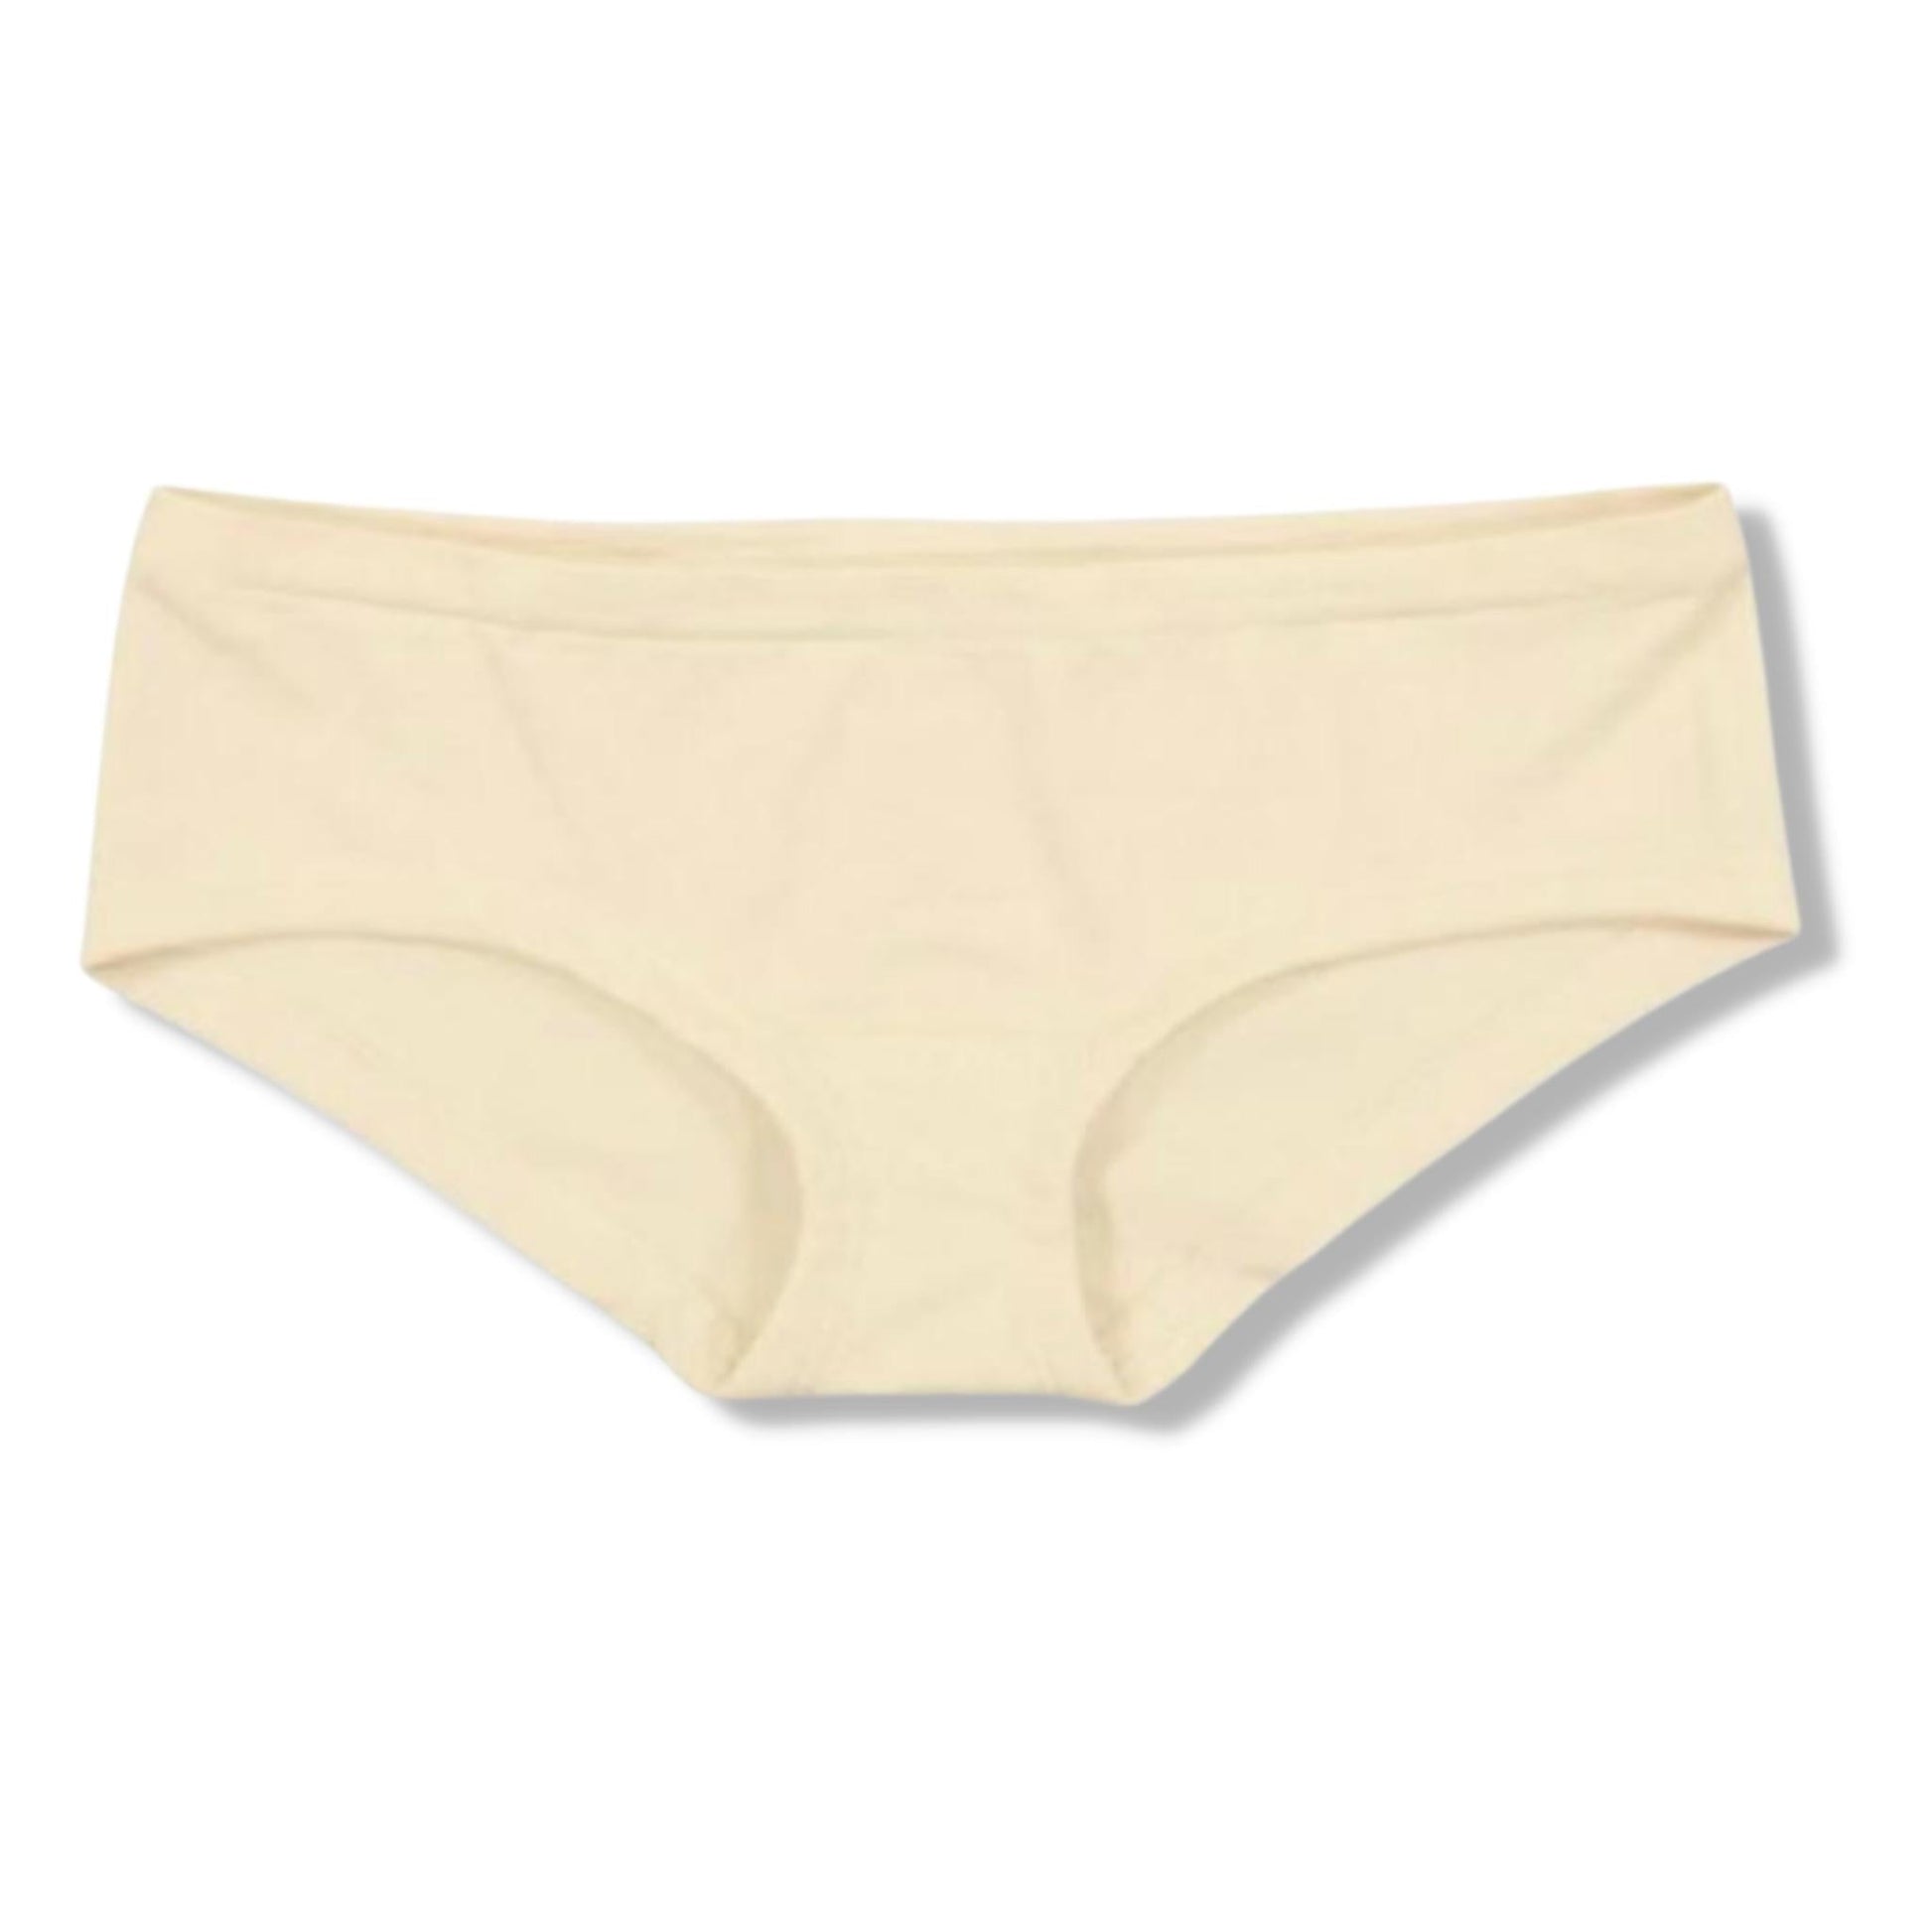 KatieJNYC Assorted Undies - a Spirit Animal - Underwear $30-$45 katie j katiej